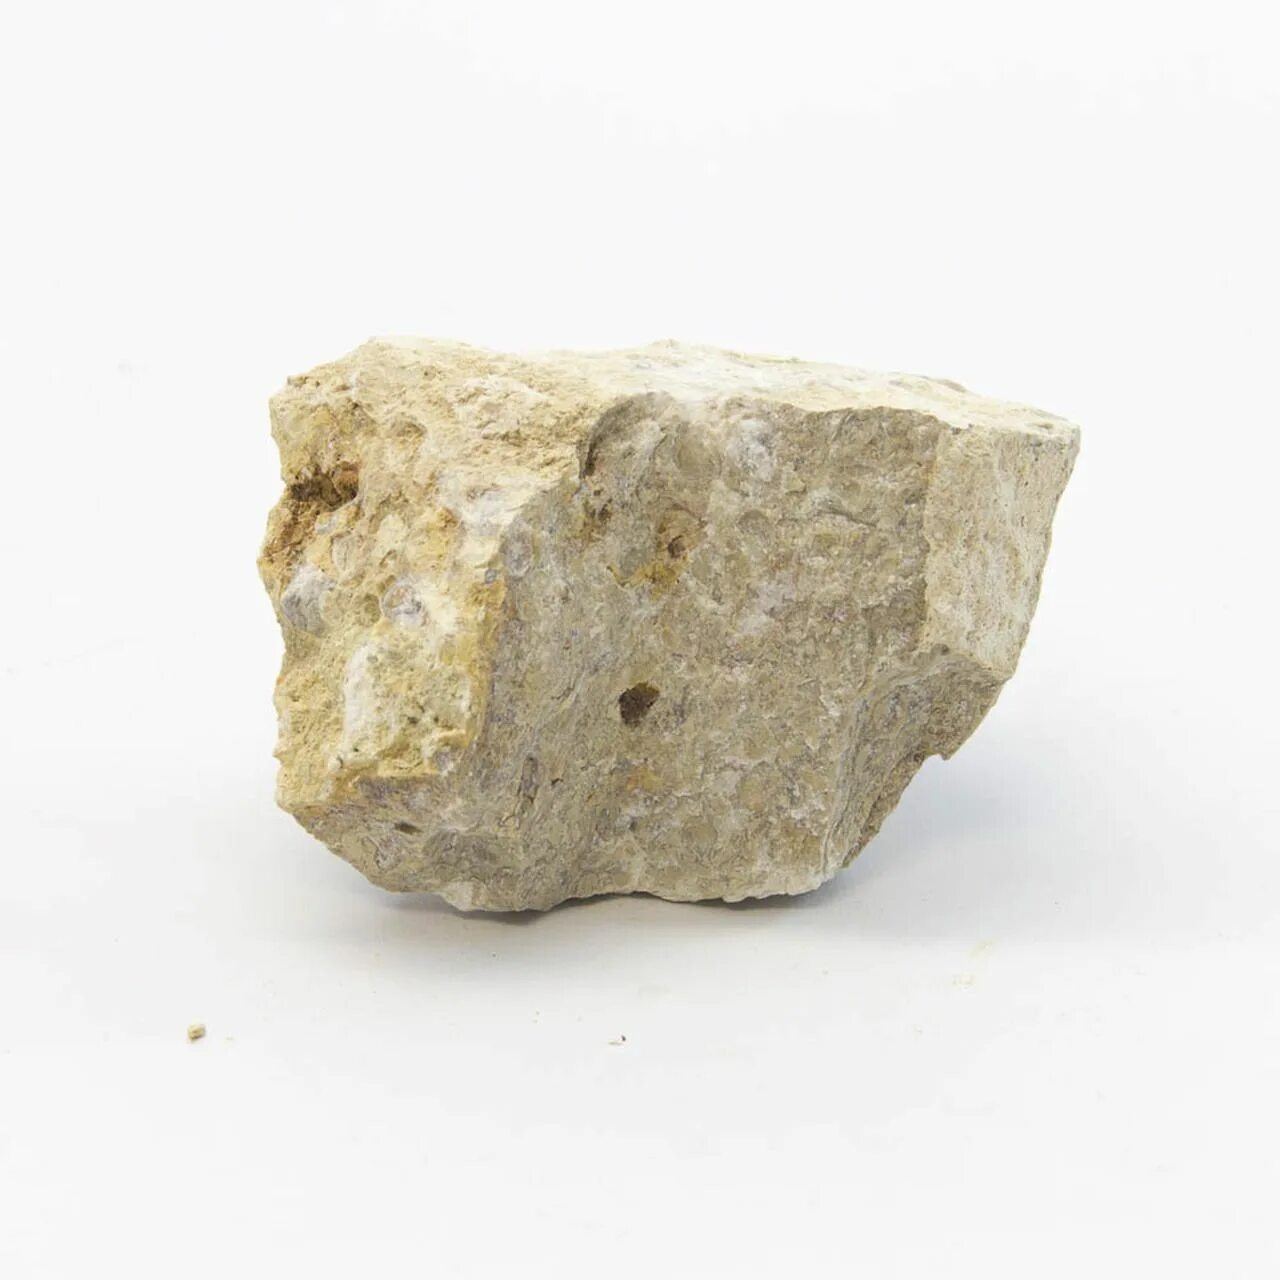 Fossiliferous limestone. Limestone Rock. Limestone Slab. Limestone Jarusalem. Горные породы известняк слюда